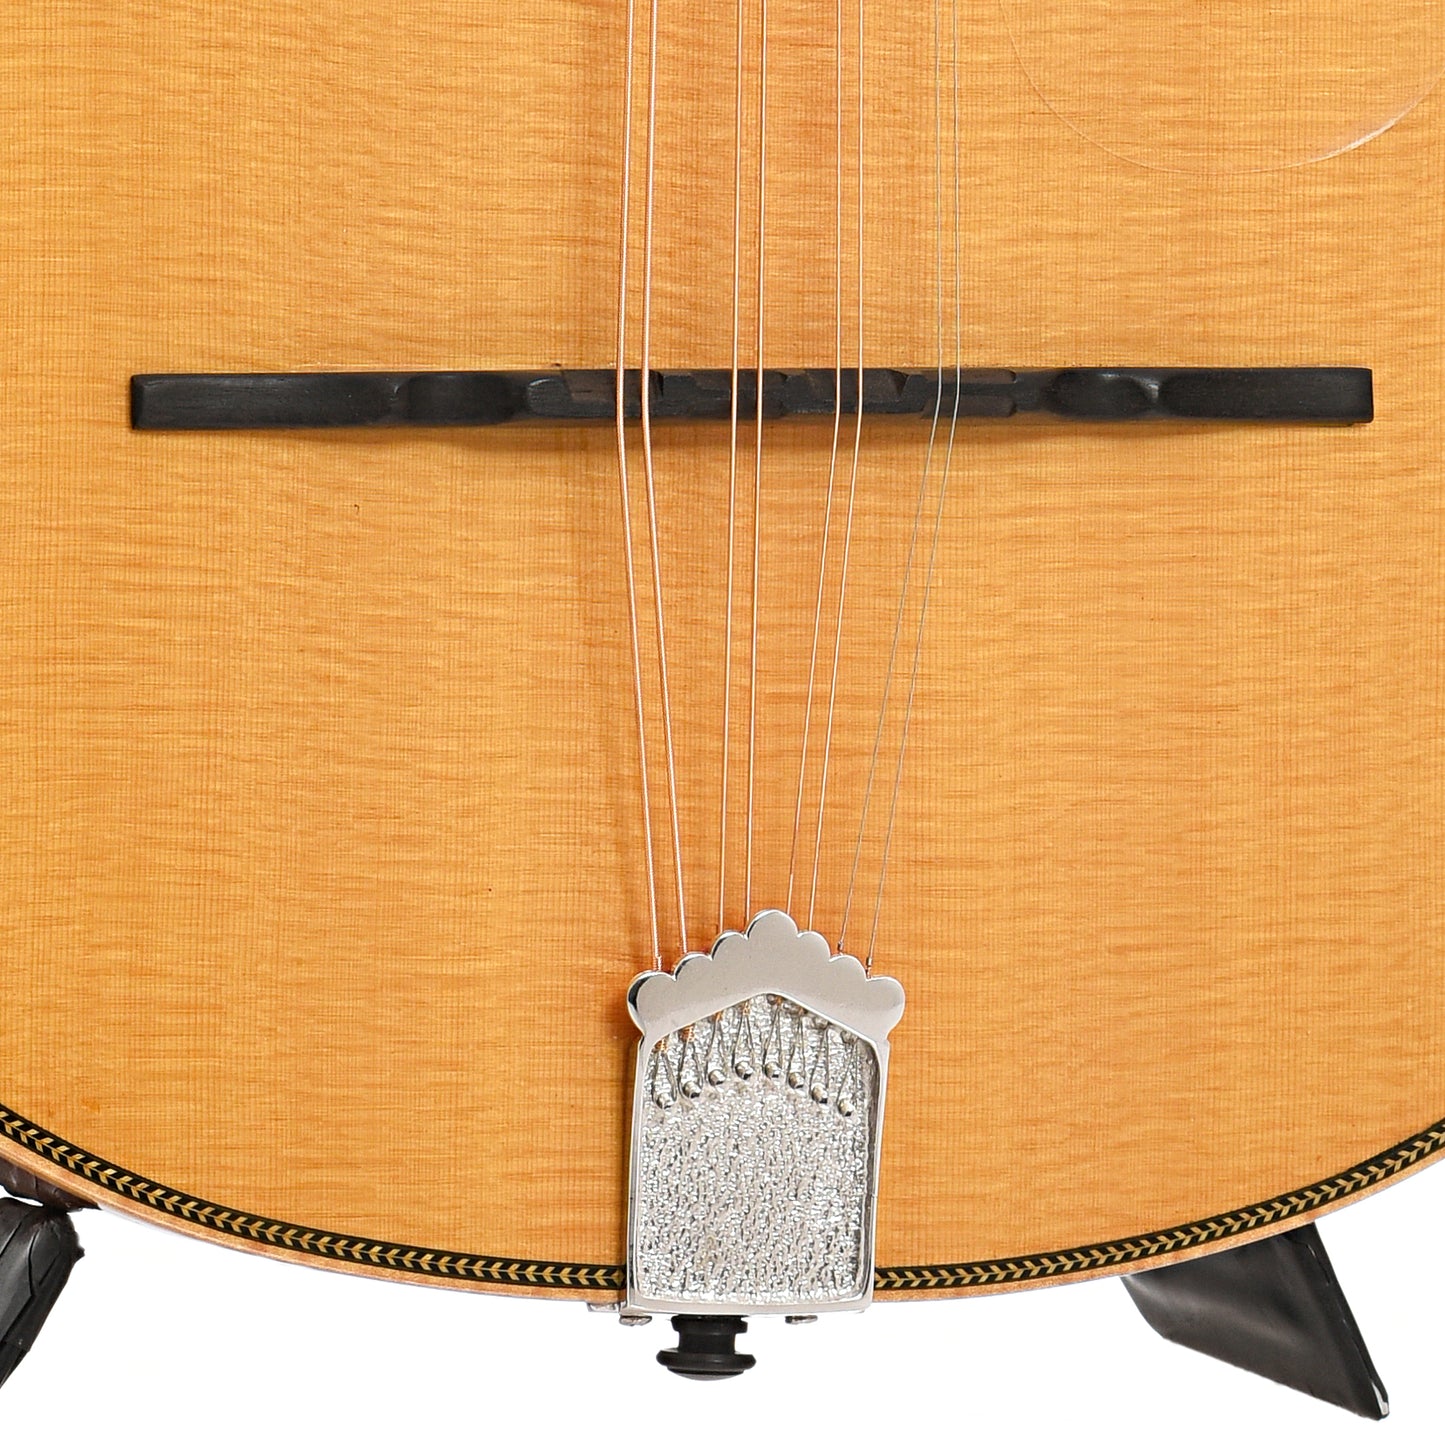 Tailpiece and bridge of Richard Beard OM3 Octave Mandolin